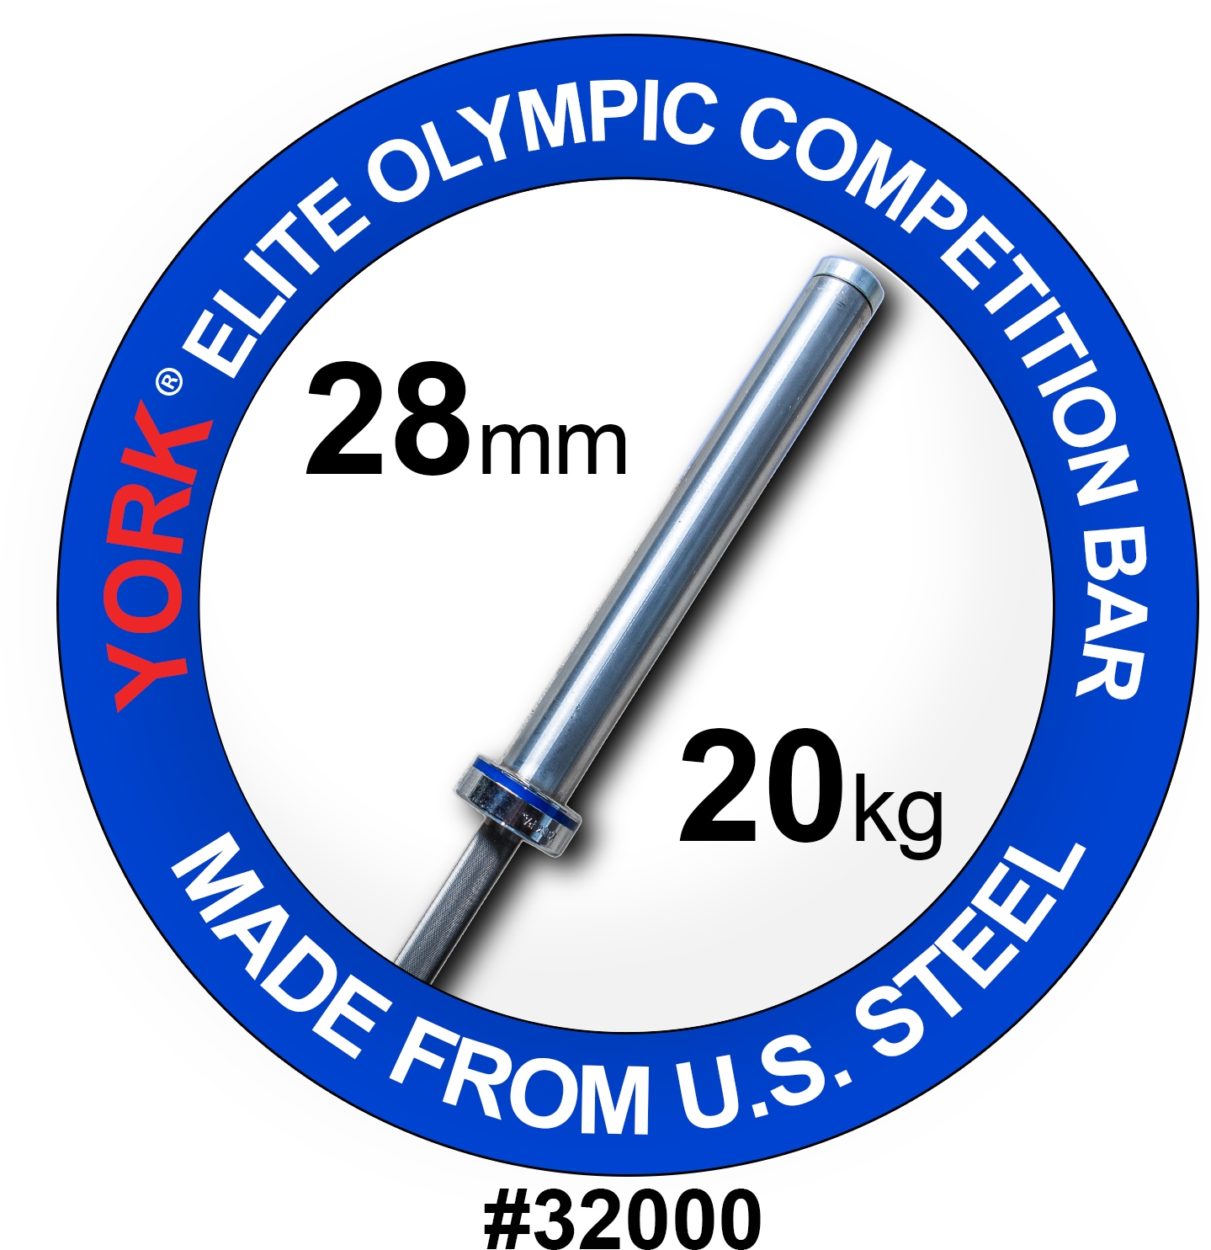 YORK Men's 20 kg "Elite" Competition Olympic Bar - 28 mm, Needle-bearing, Satin Chrome